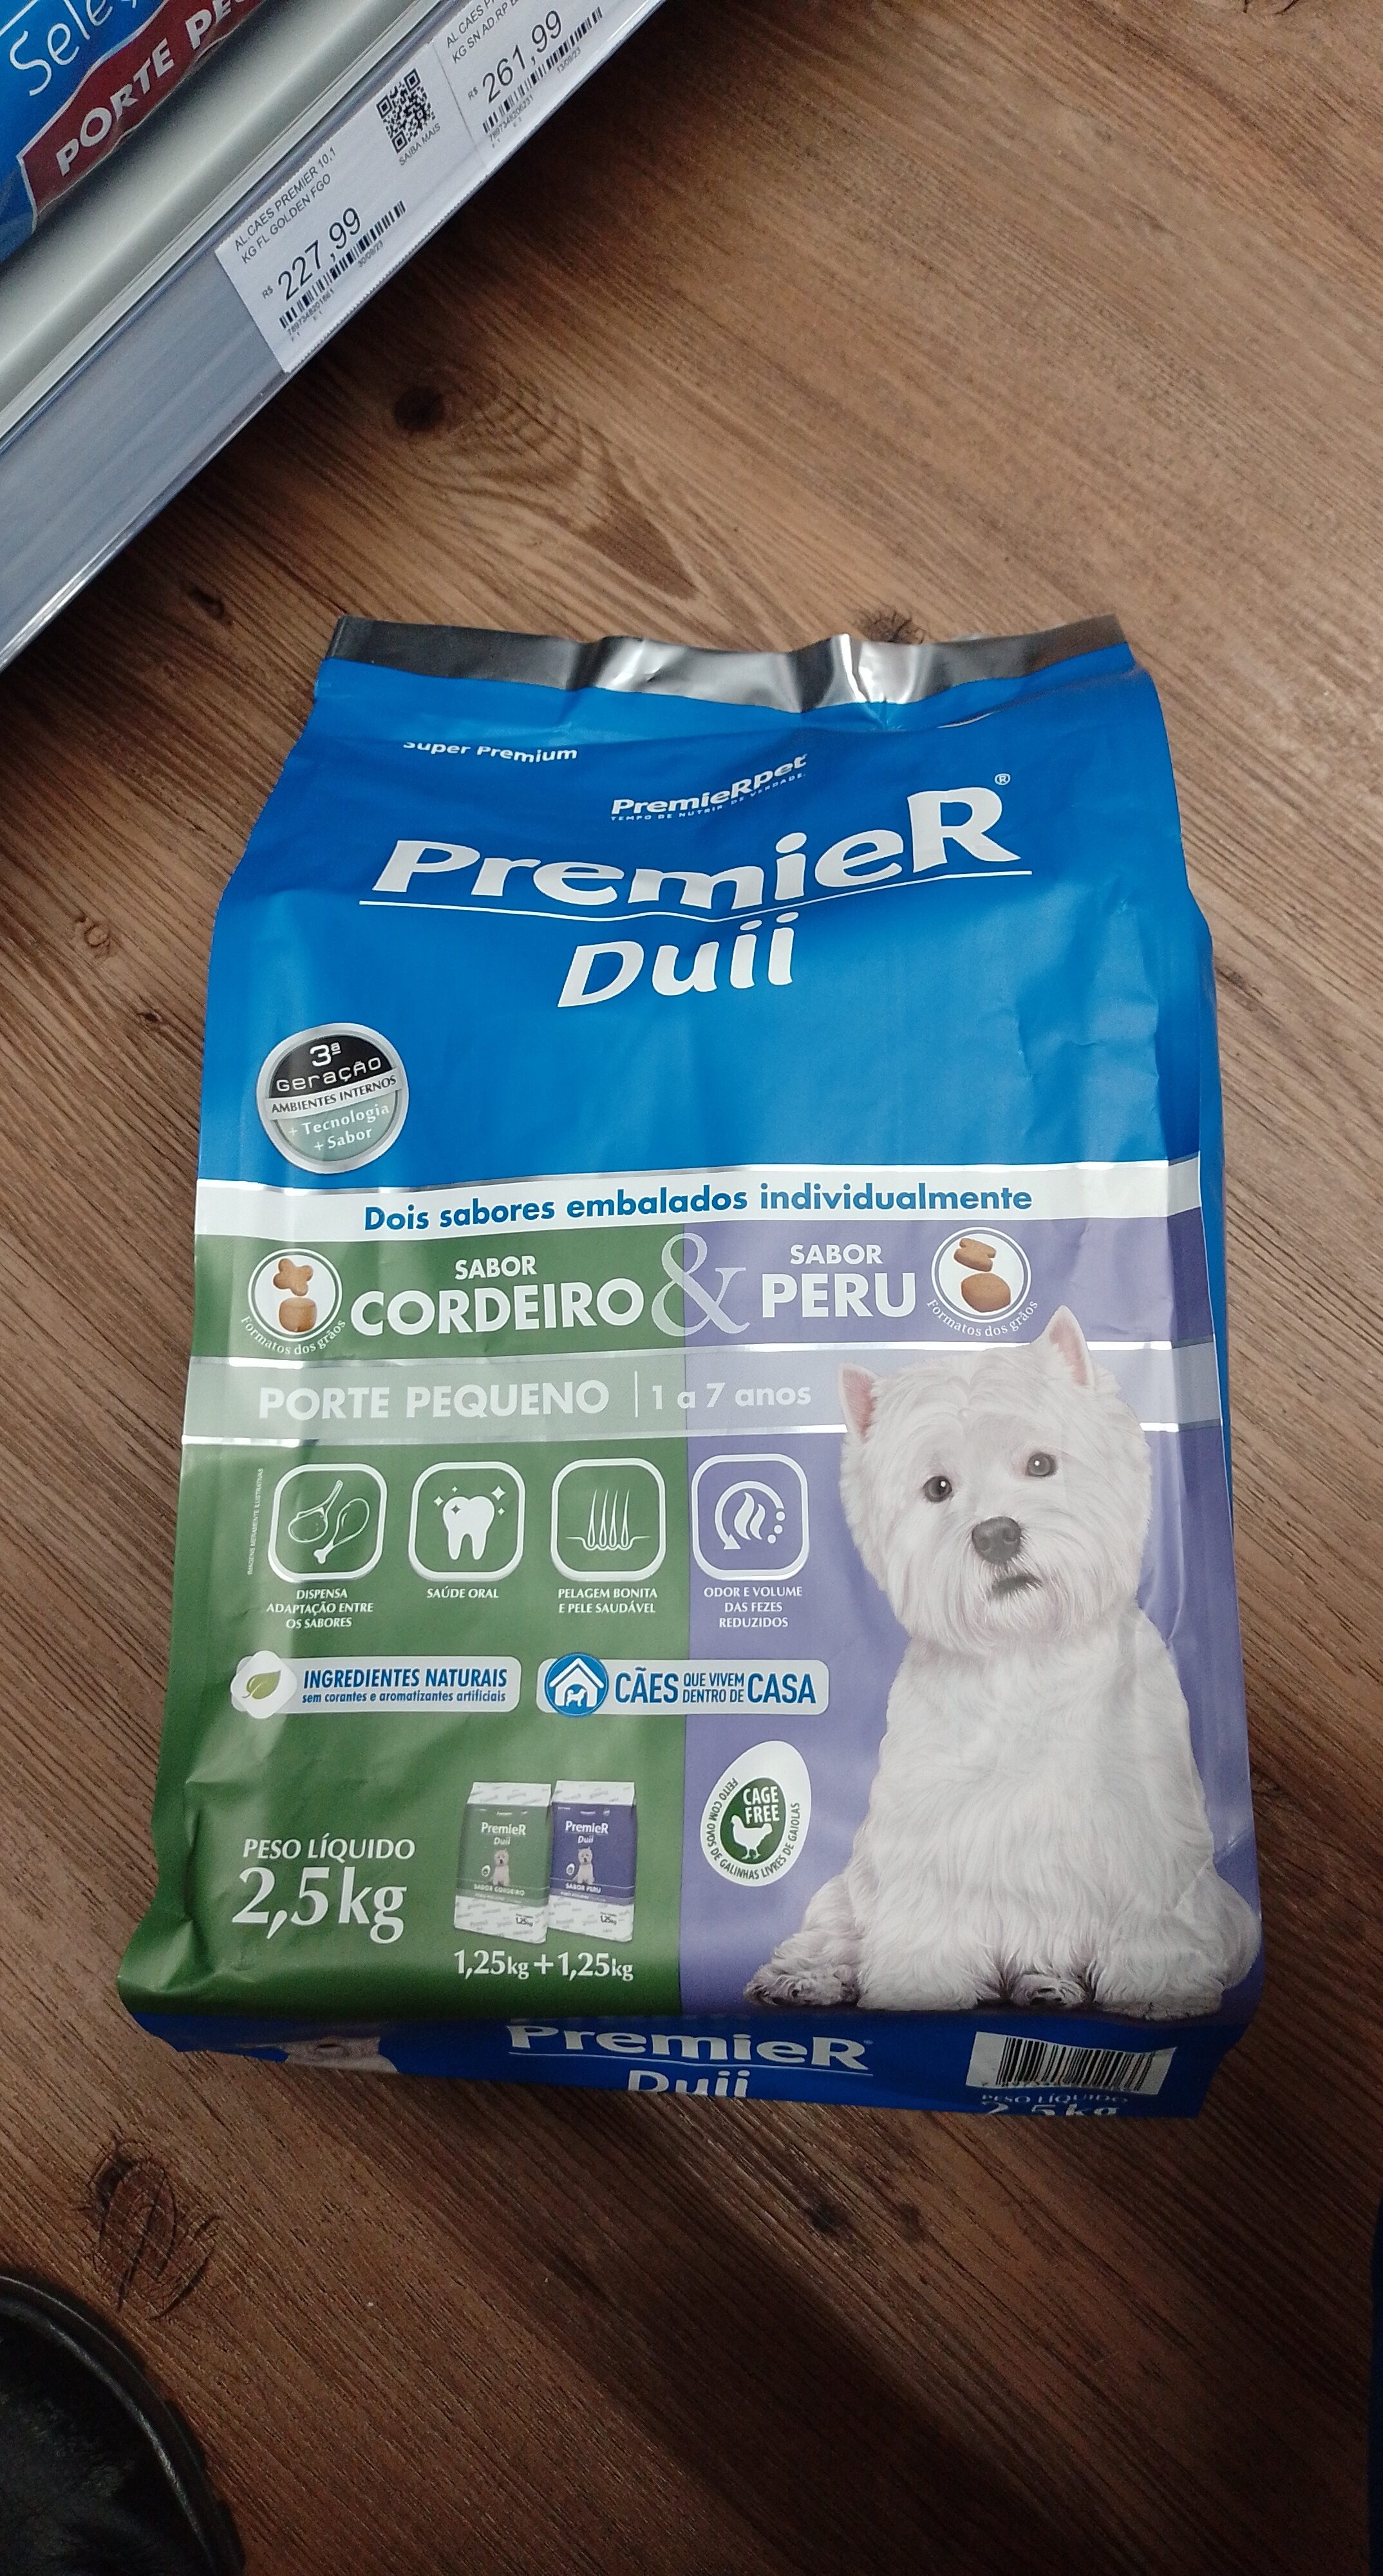 Premier Duii Cordeiro/Peru 2,5kg - Product - pt